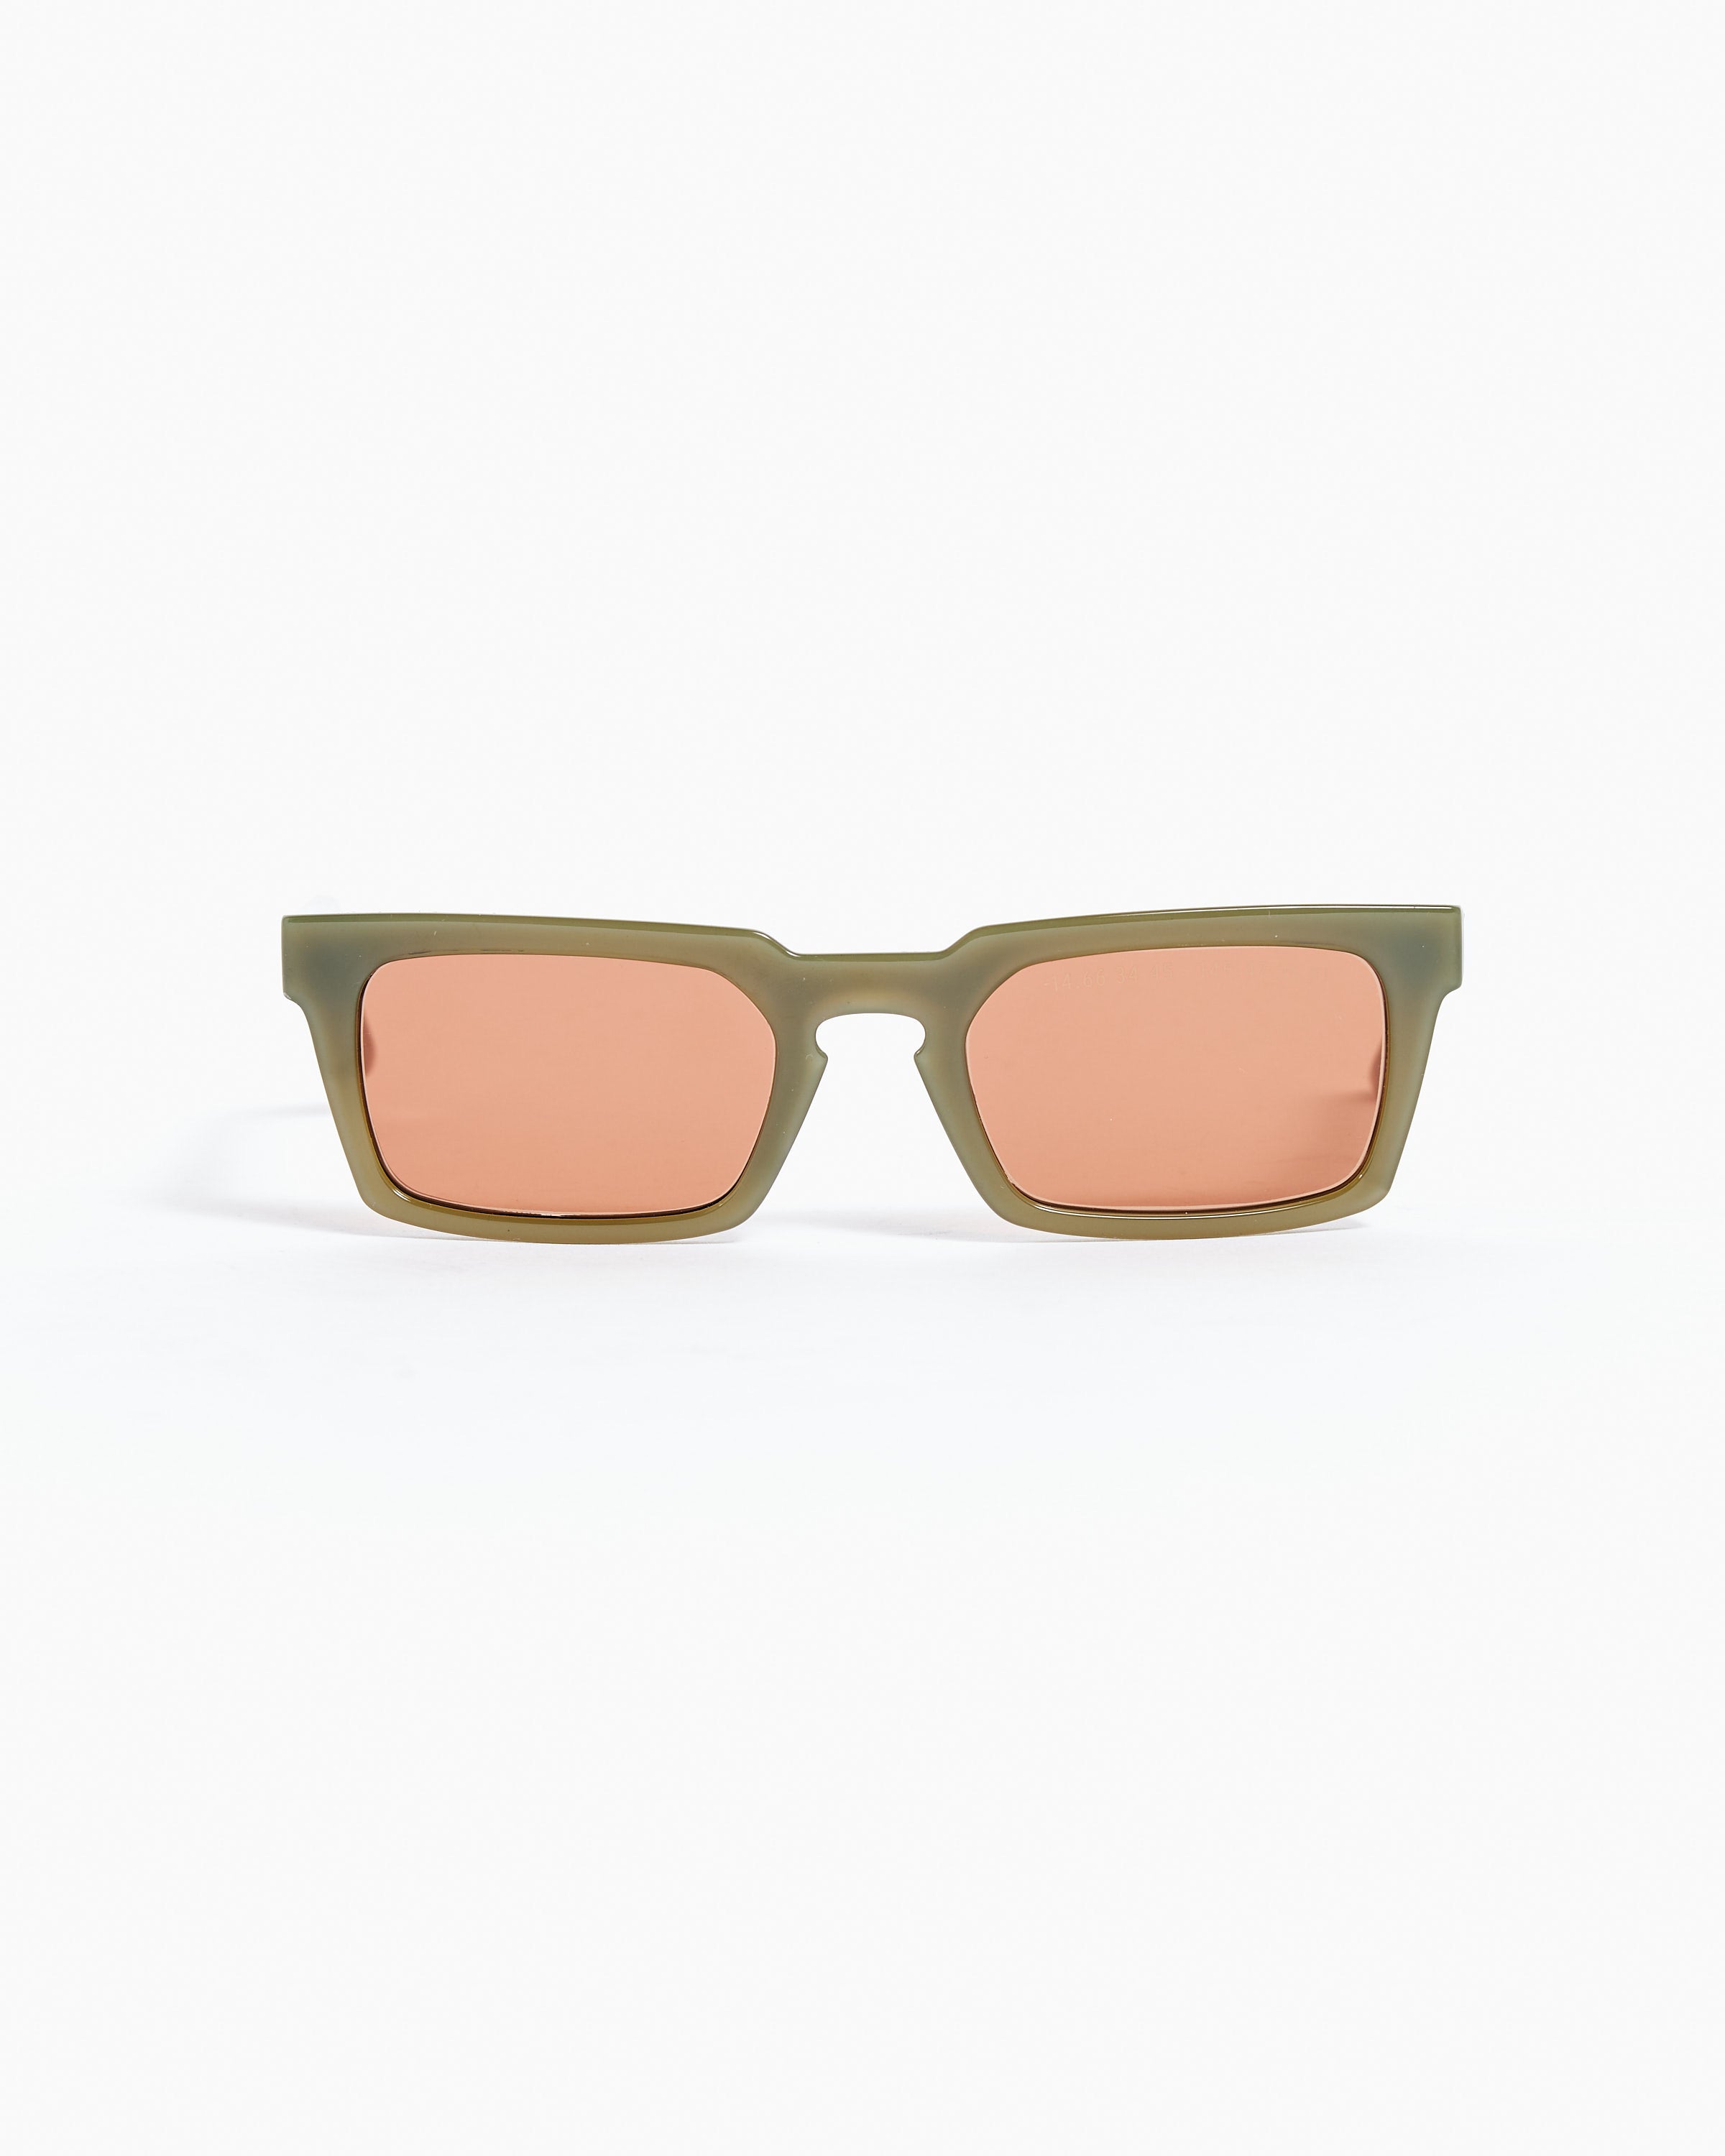 Type 02 Low Sunglasses